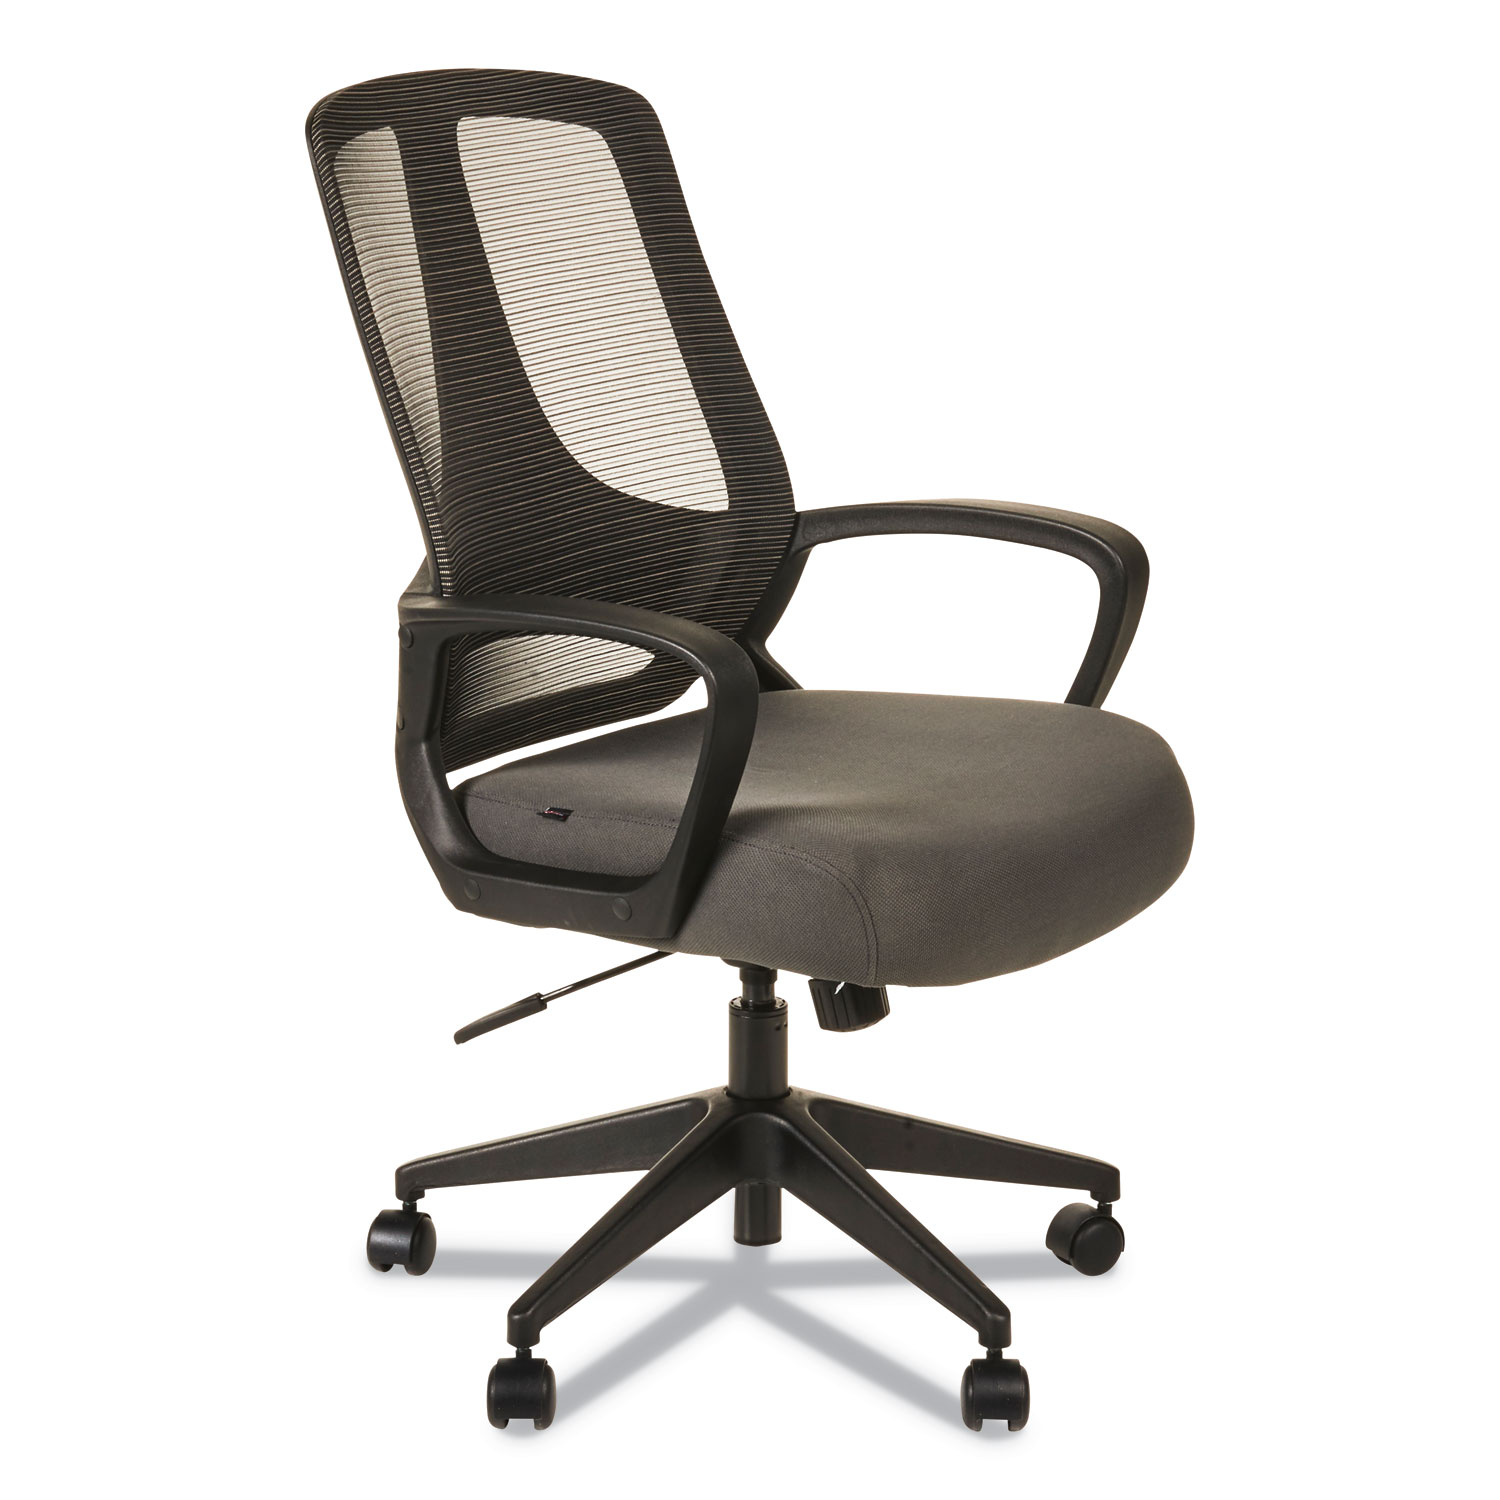  Alera ALEMB4748 Alera MB Series Mesh Mid-Back Office Chair, Supports up to 275 lbs., Gray Seat/Black Back, Black Base (ALEMB4748) 